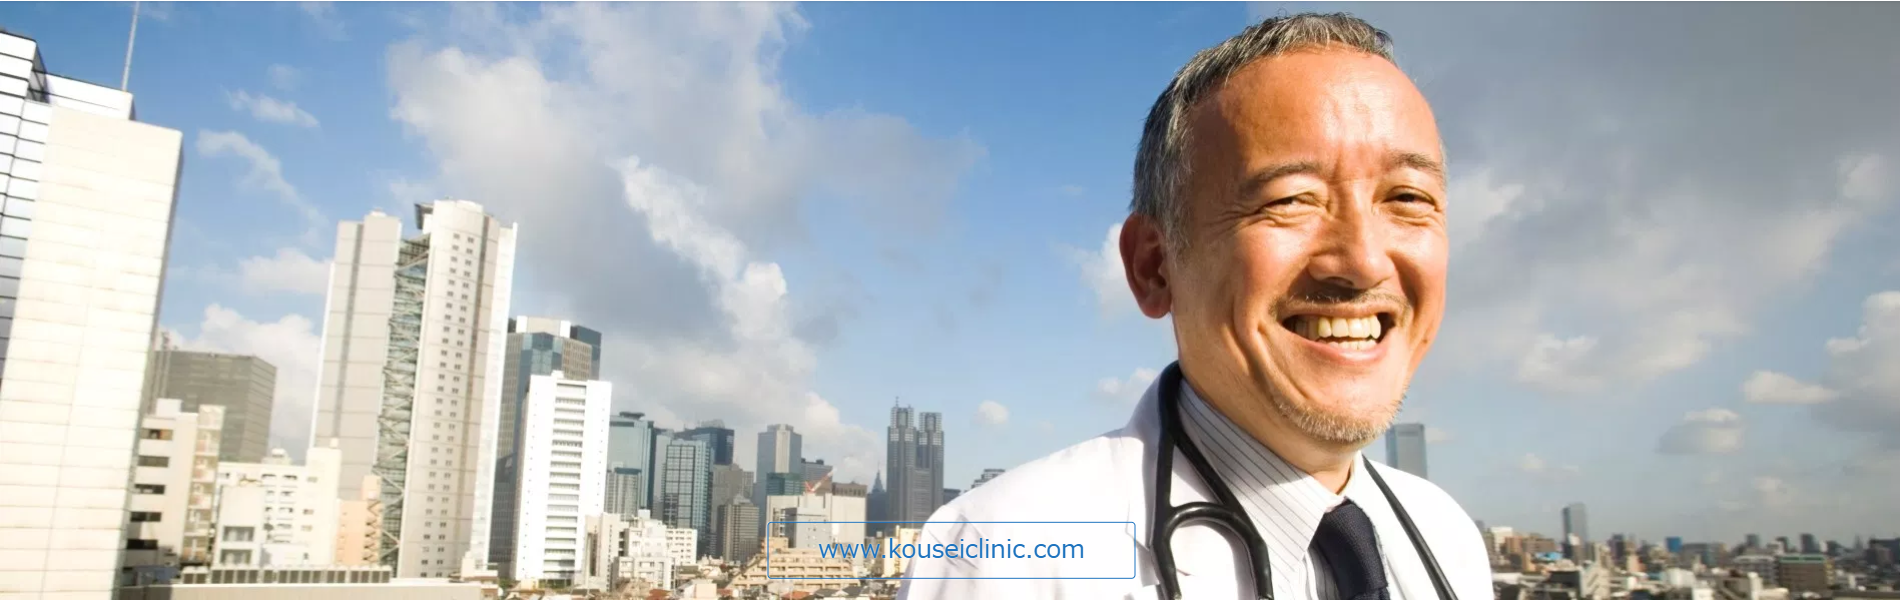 KOUSEI CLINIC เป็นยาแผนปฏิรูปล่าสุดโดยแพทย์ชาวญี่ปุ่น